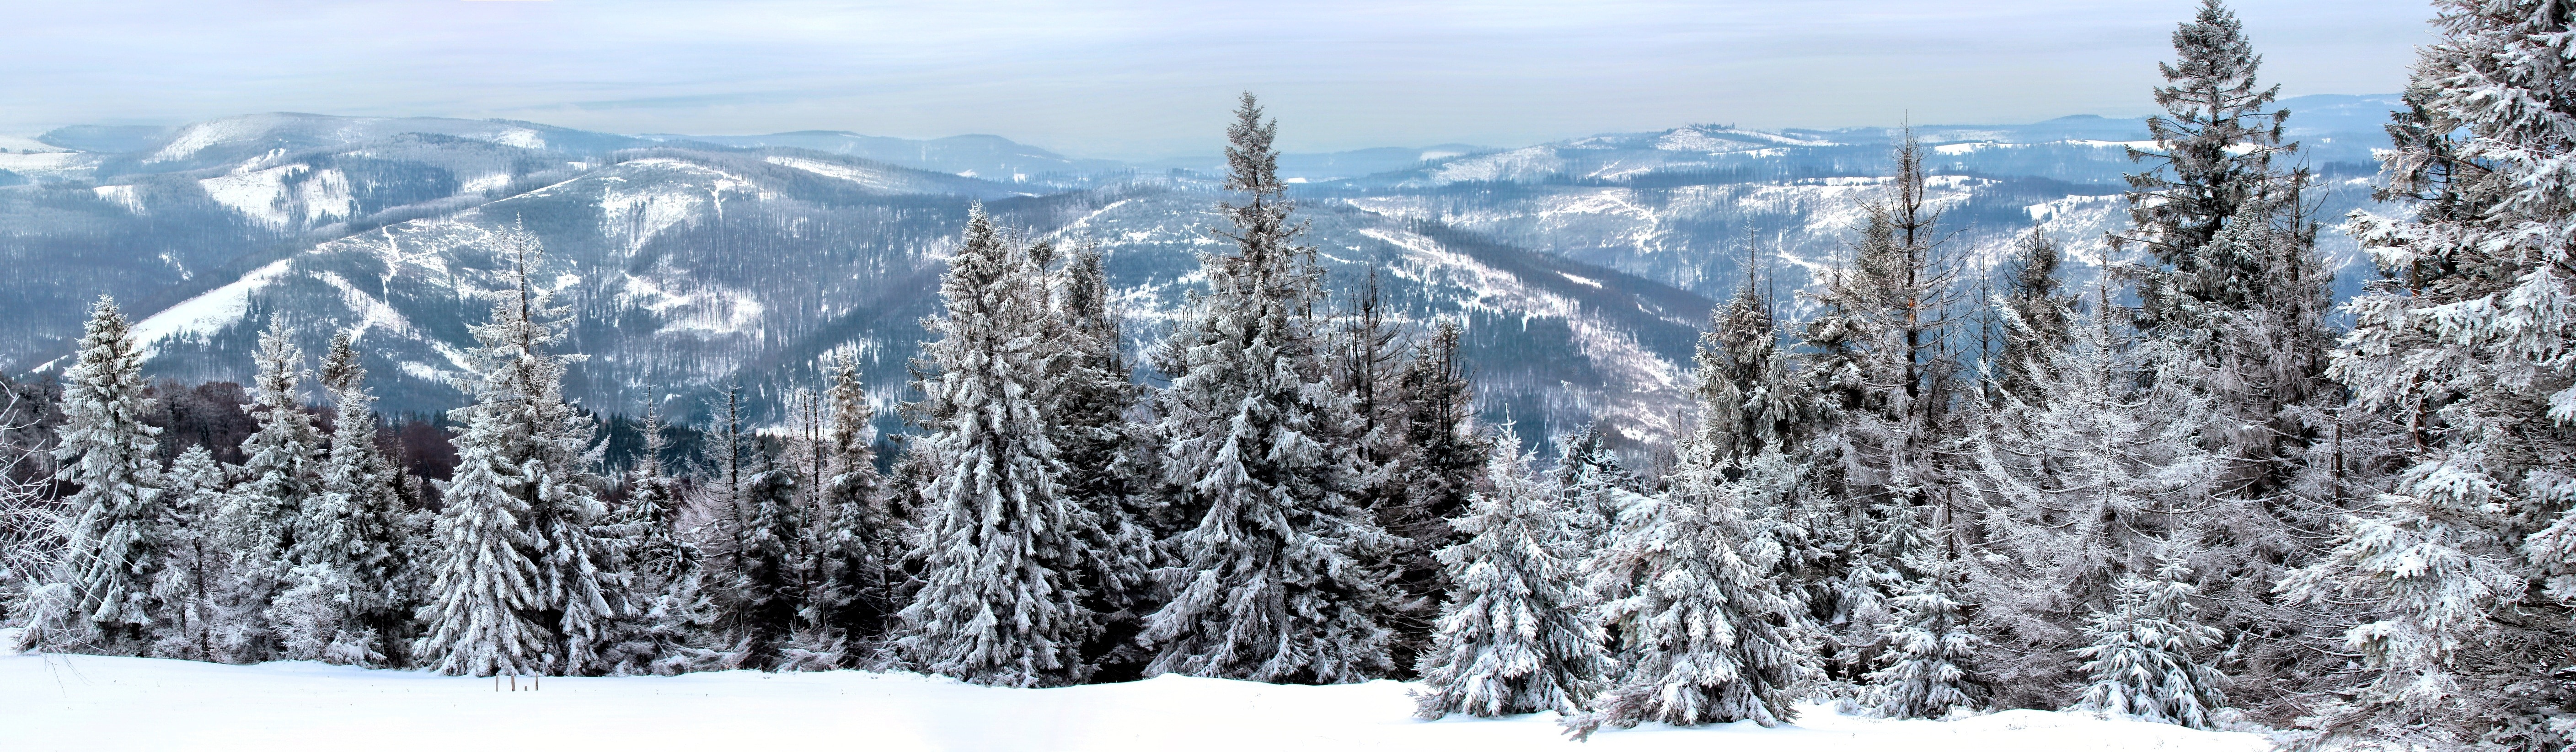 Mountains, Tree, Landscape, Snow, Winter, snow, winter